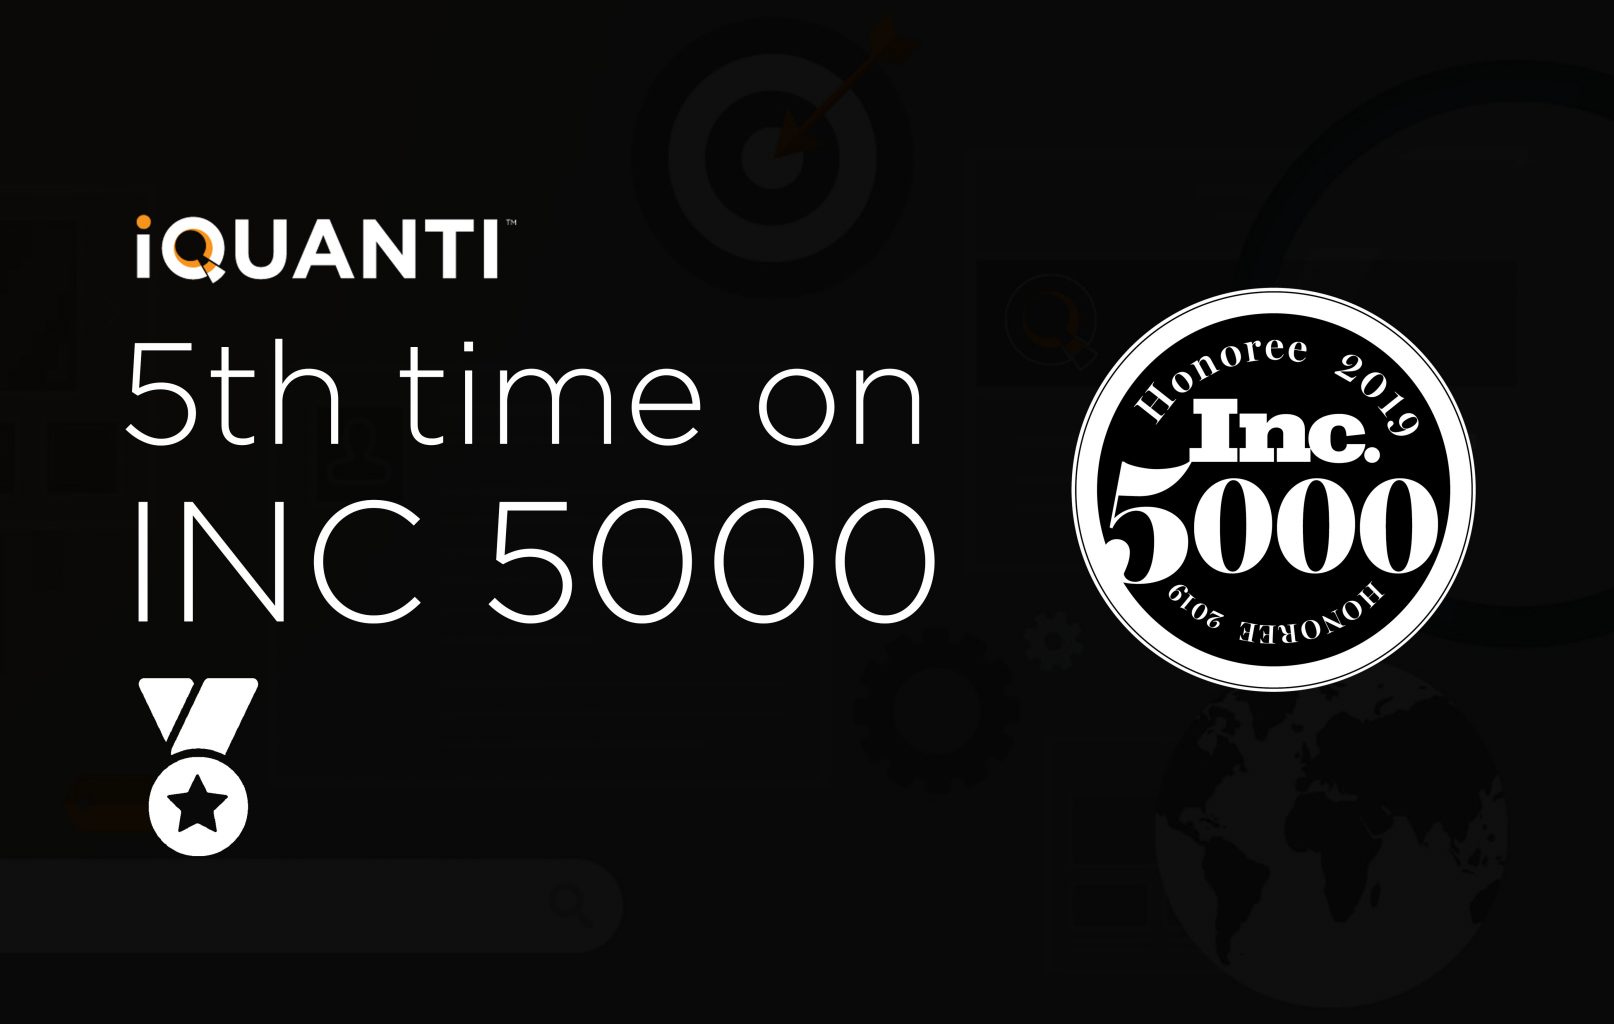 5th time on Inc. 5000 list 2019 - iQuanti Digital Marketing Company